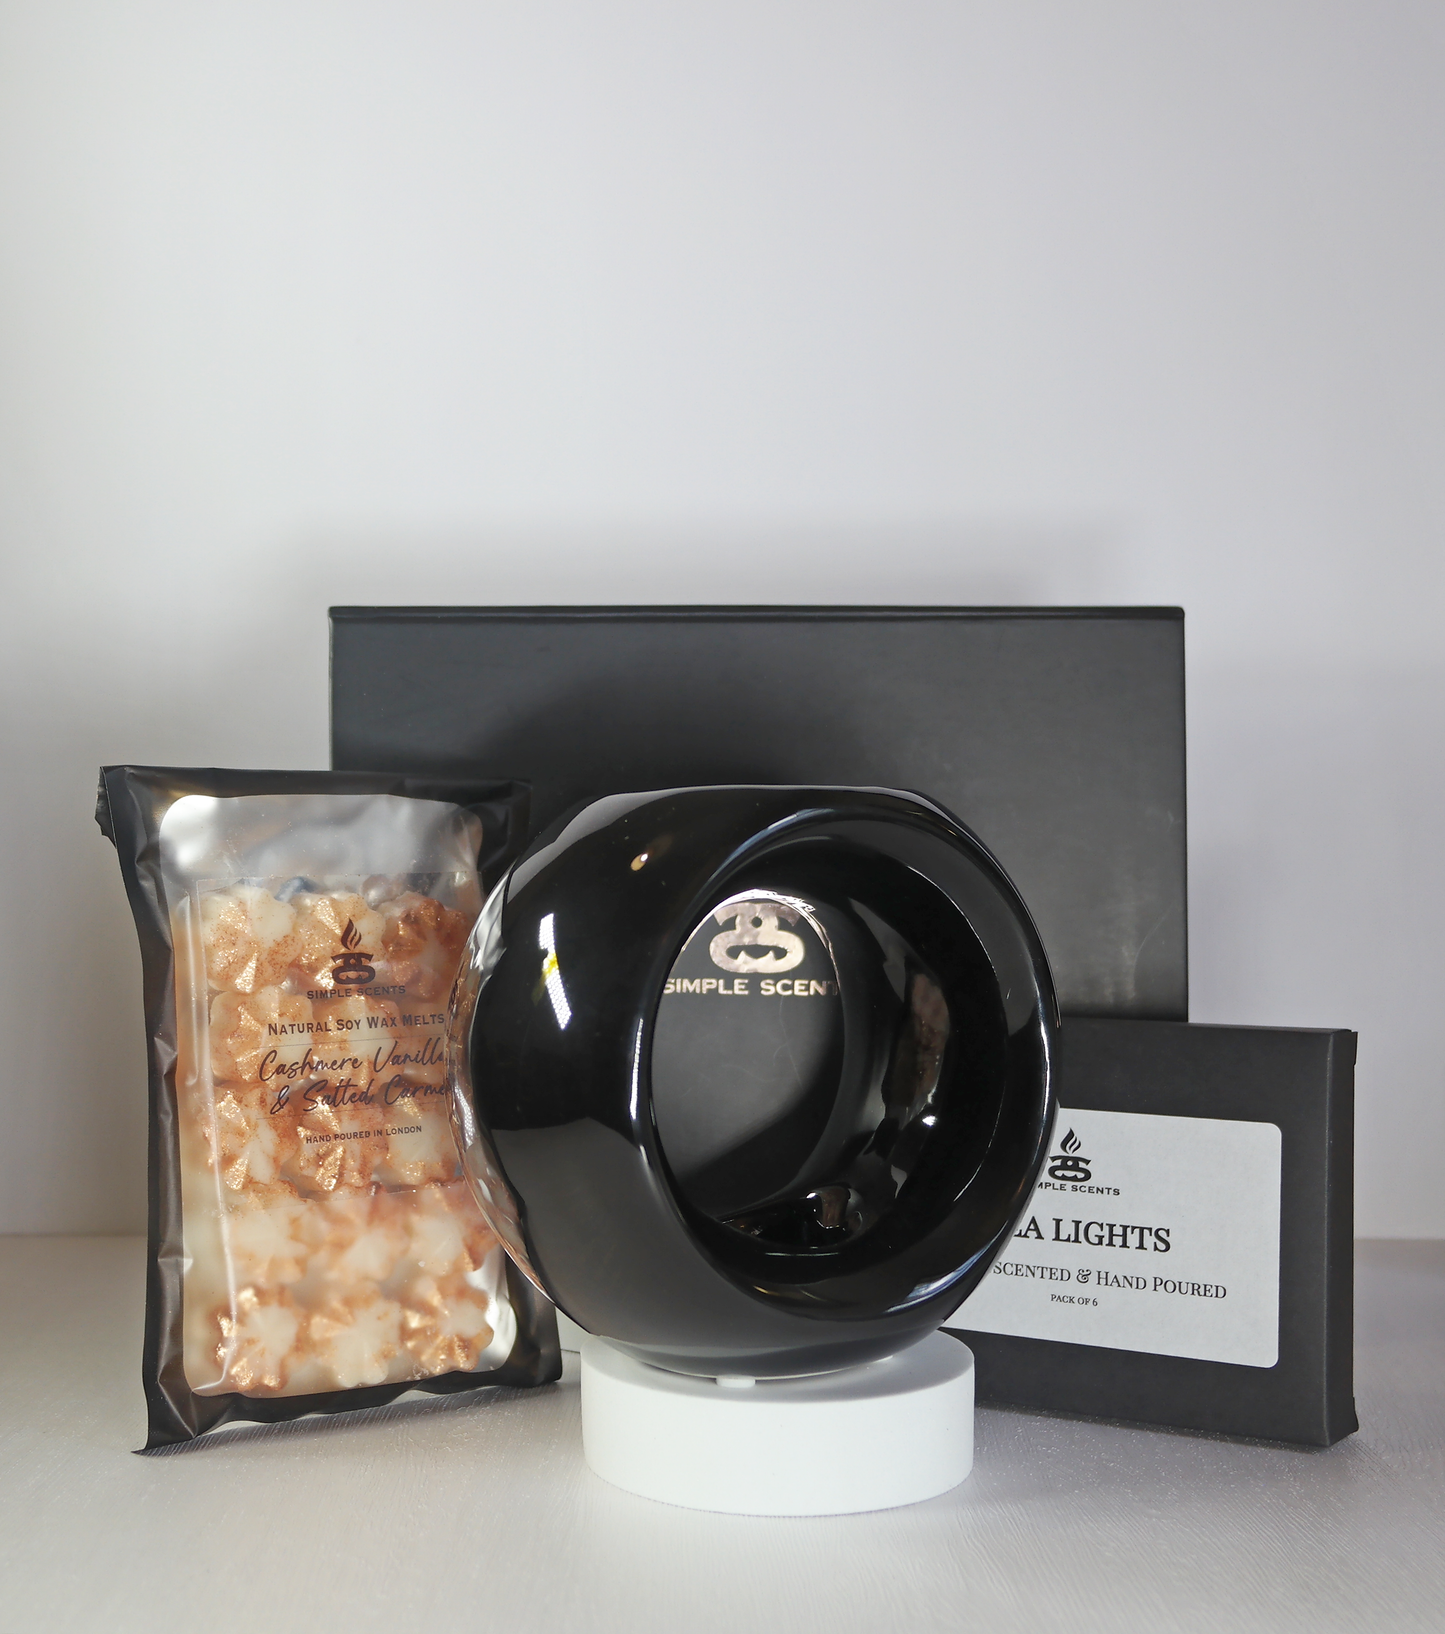 Simple Scents Experience Wax Melt & Oslo Wax Burner Gift Set